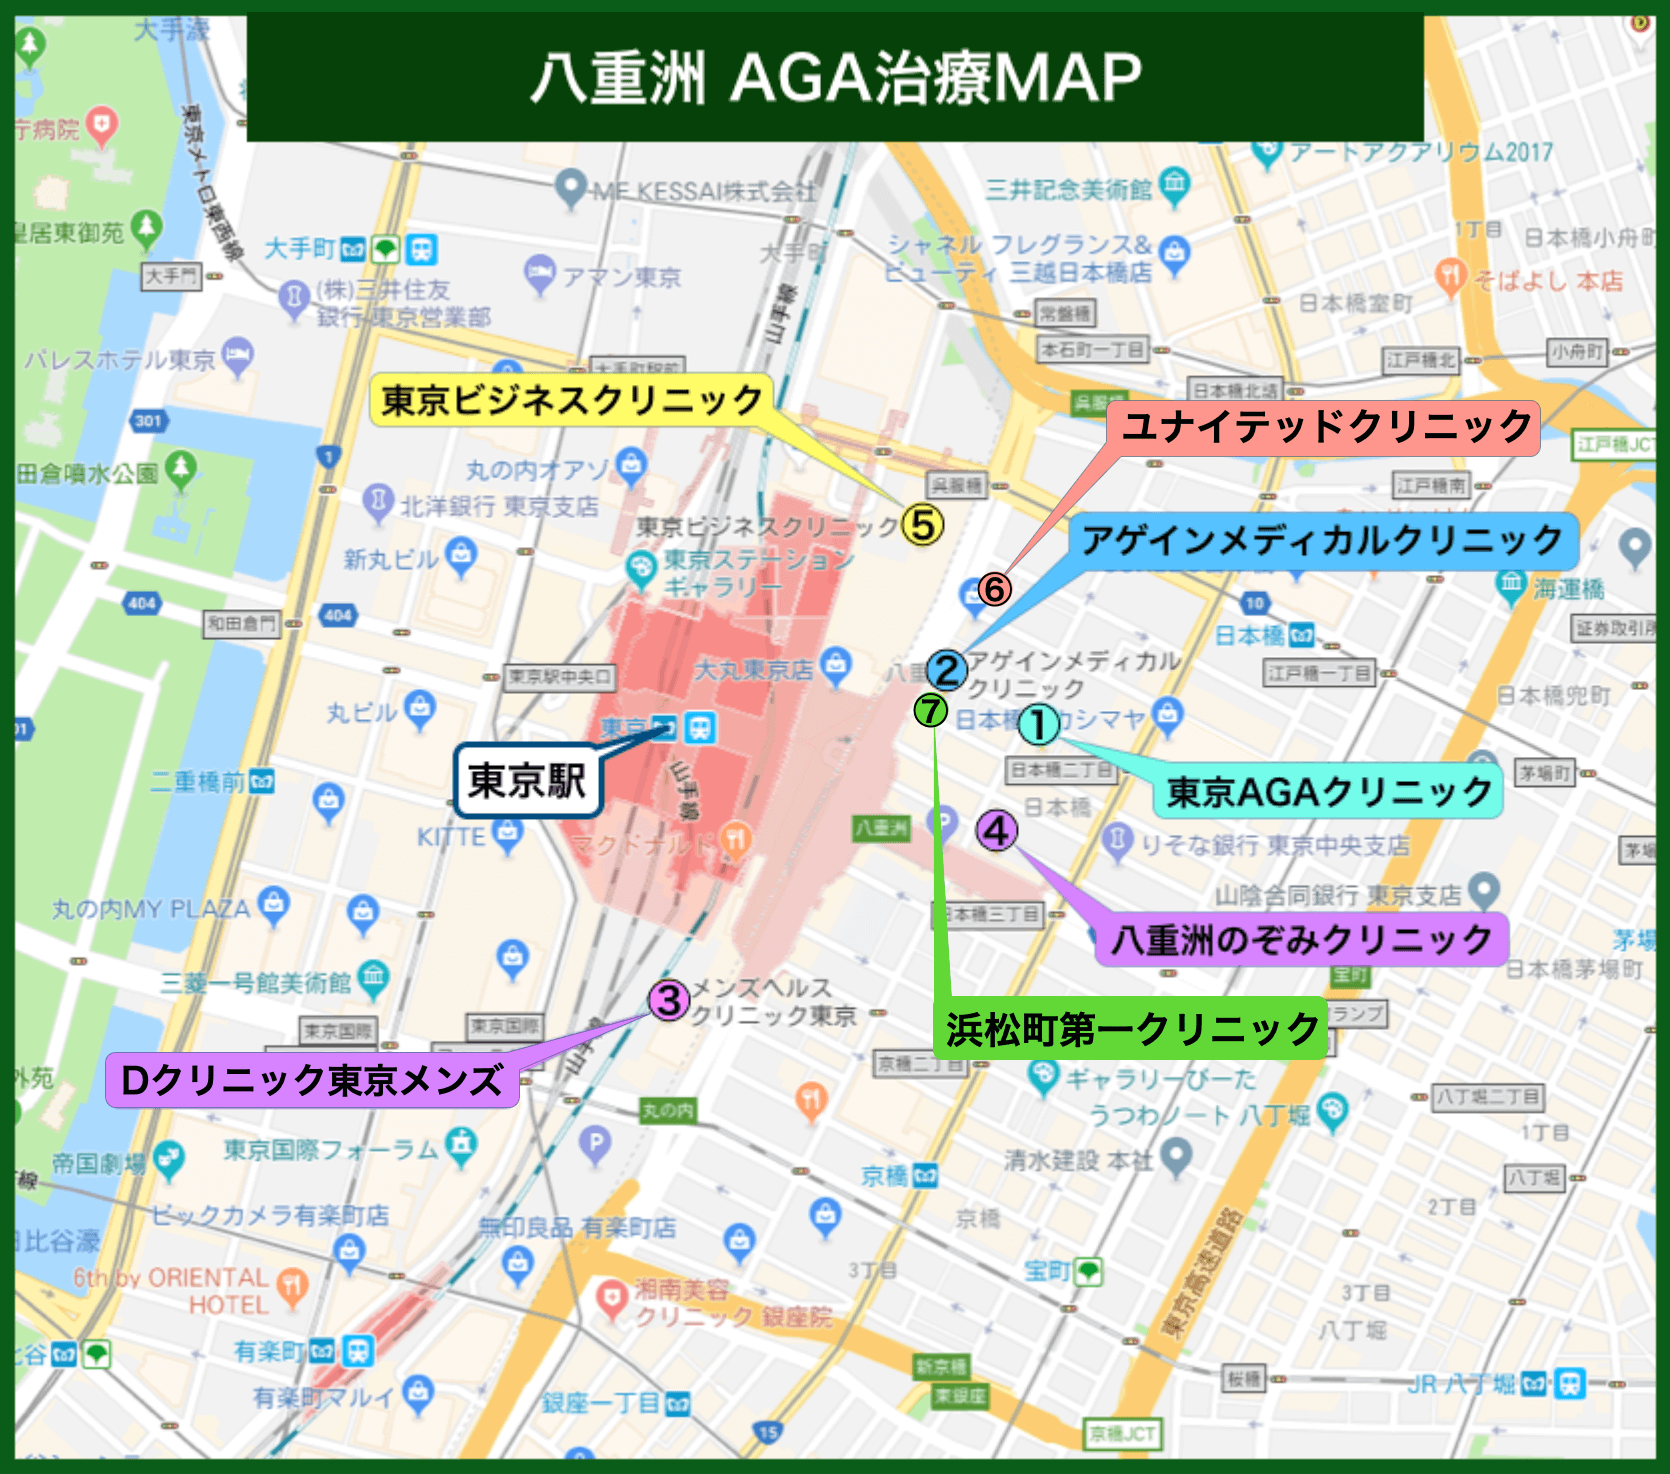 八重洲AGA治療MAP